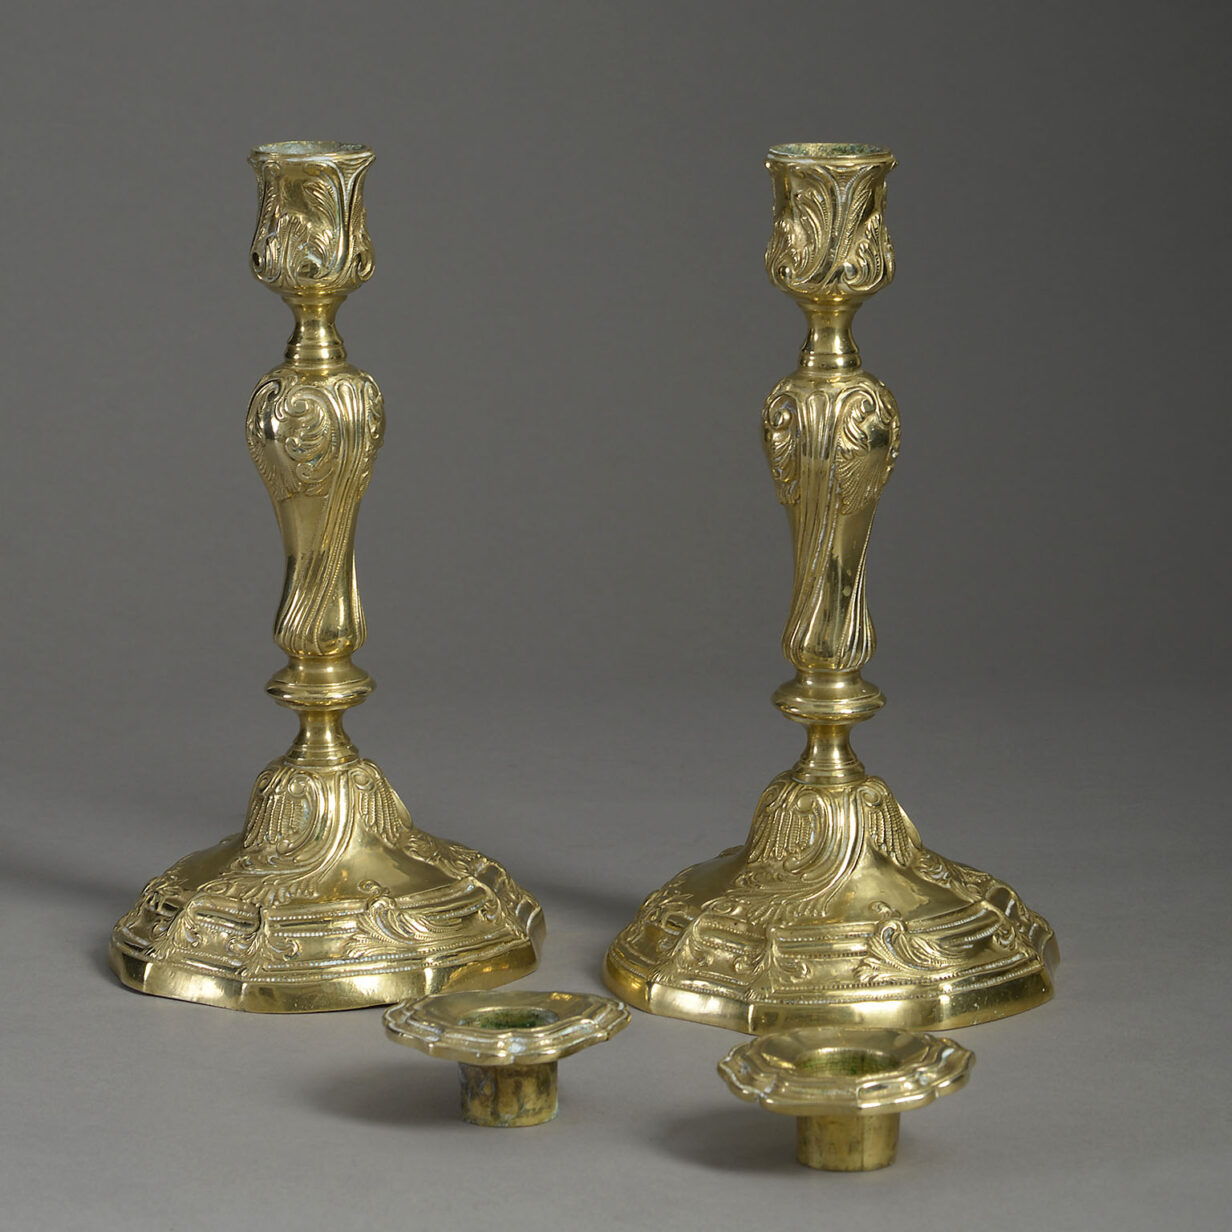 Pair of 18th century louis xv period rococo brass candlesticks